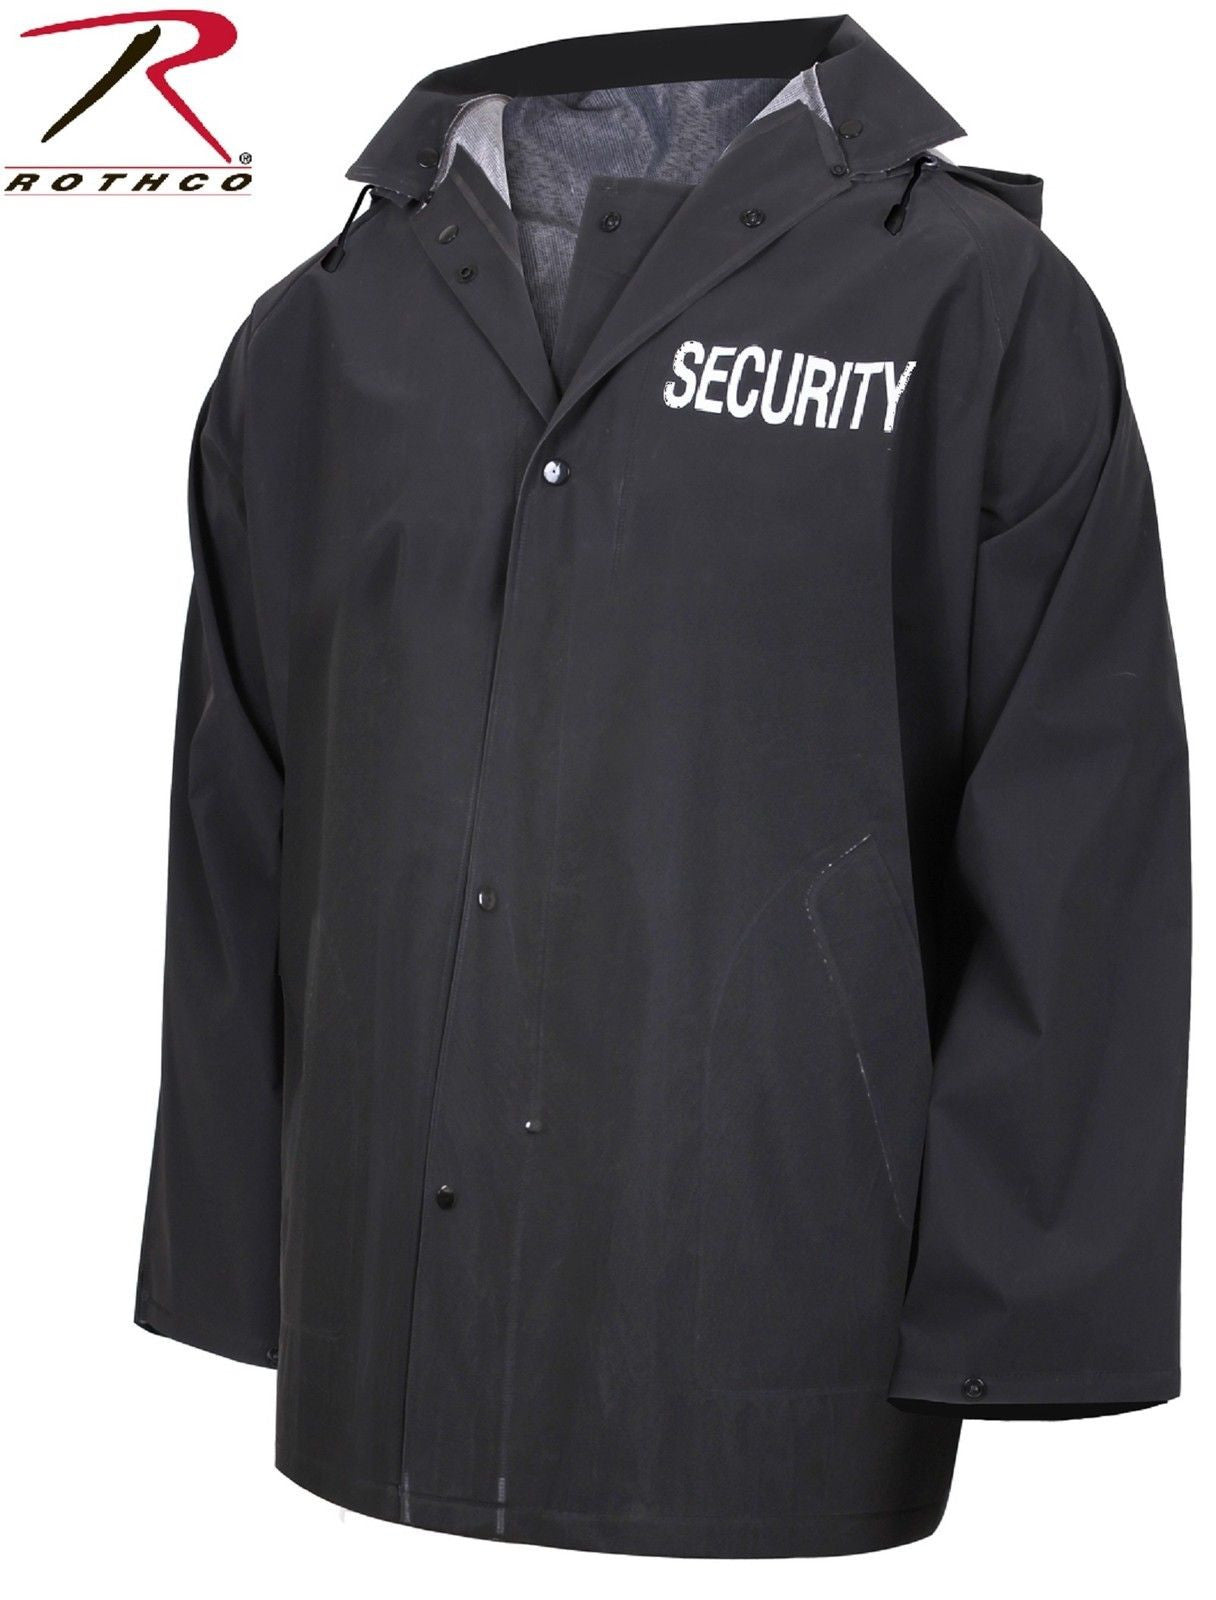 Mens Black SECURITY Rain Jacket - Rothco PVC Bouncer Staff Uniform Coat